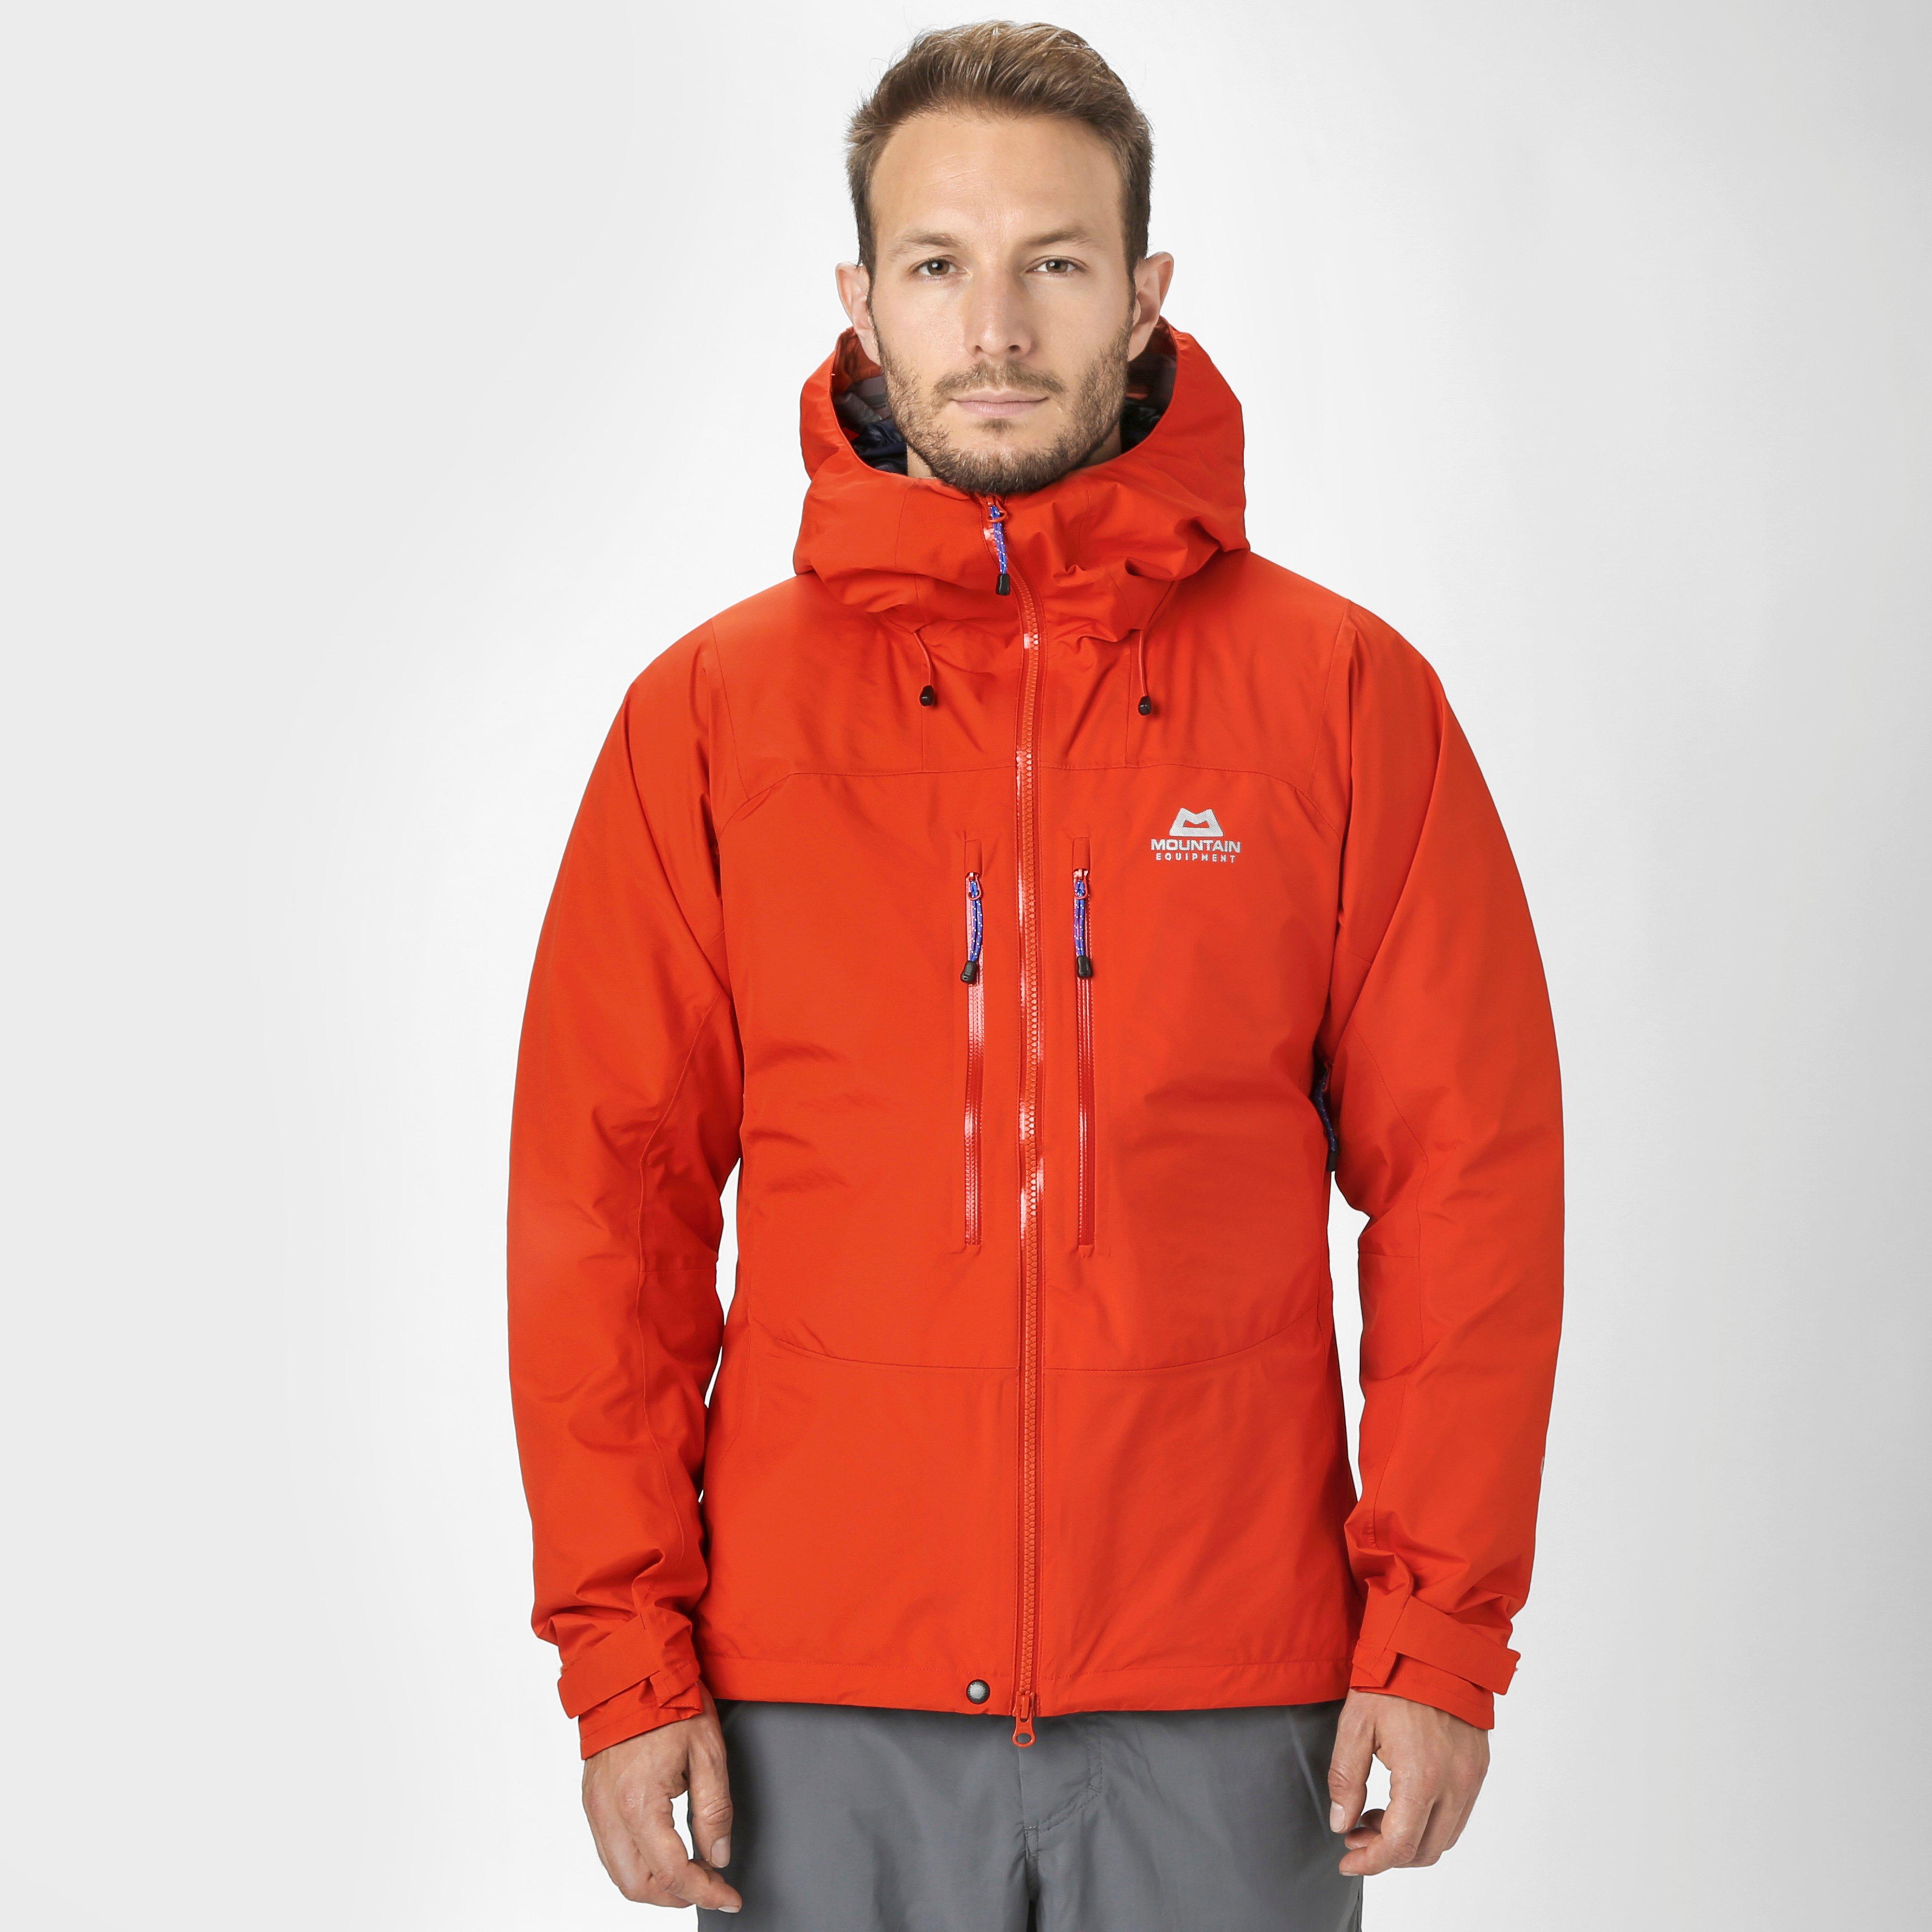 Mountain Waterproof Jacket - Jacket To